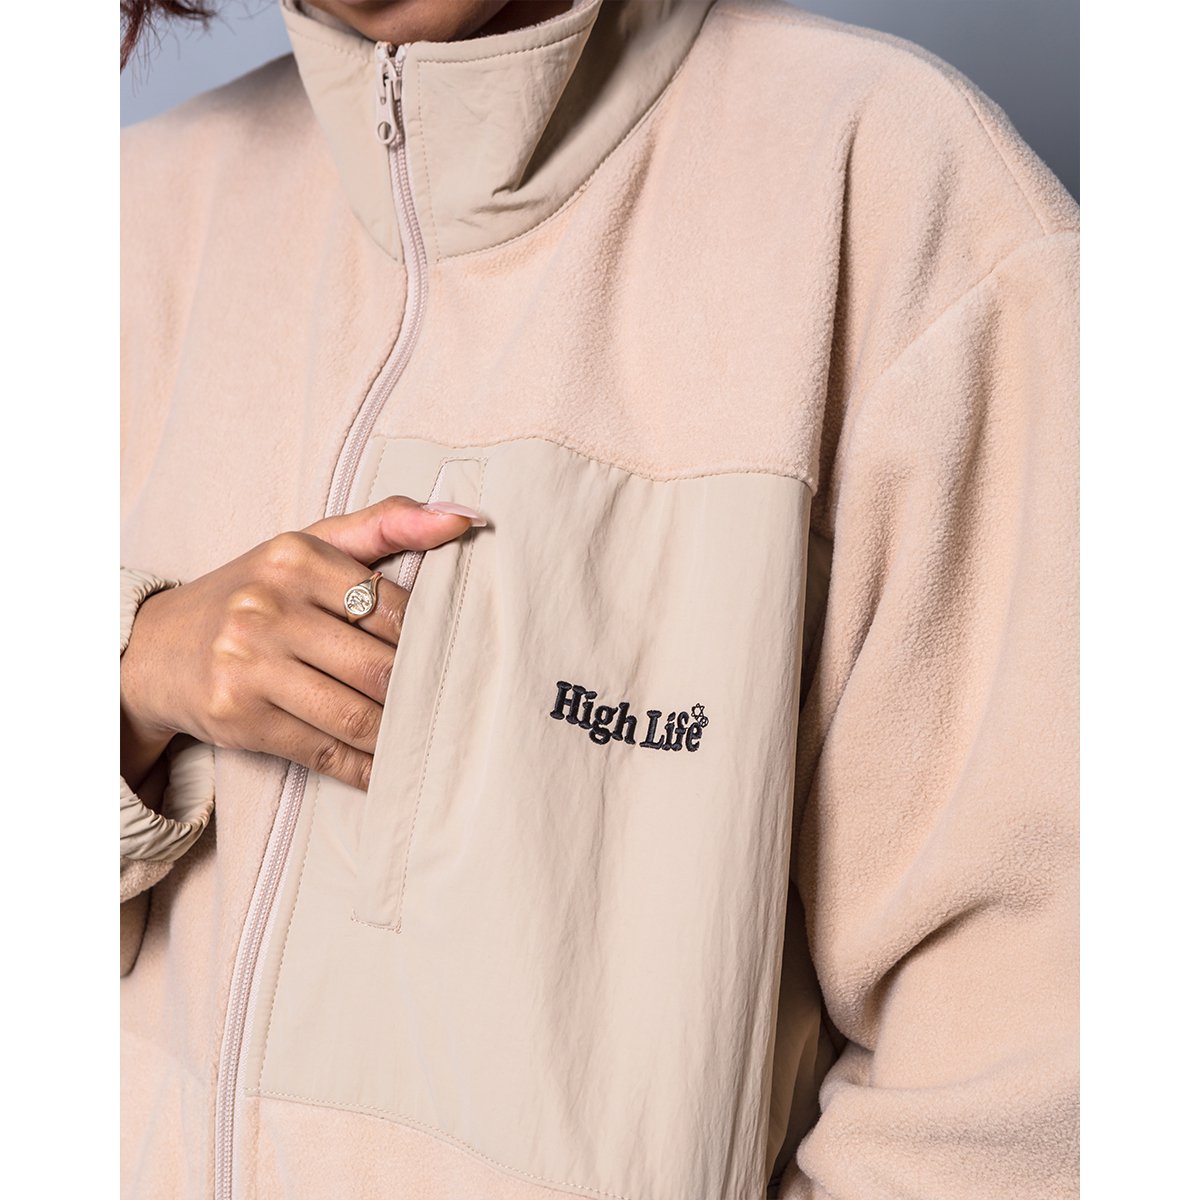 HighLife / Fleece ZipUp Jackets - Beige - - HighLife Online Store